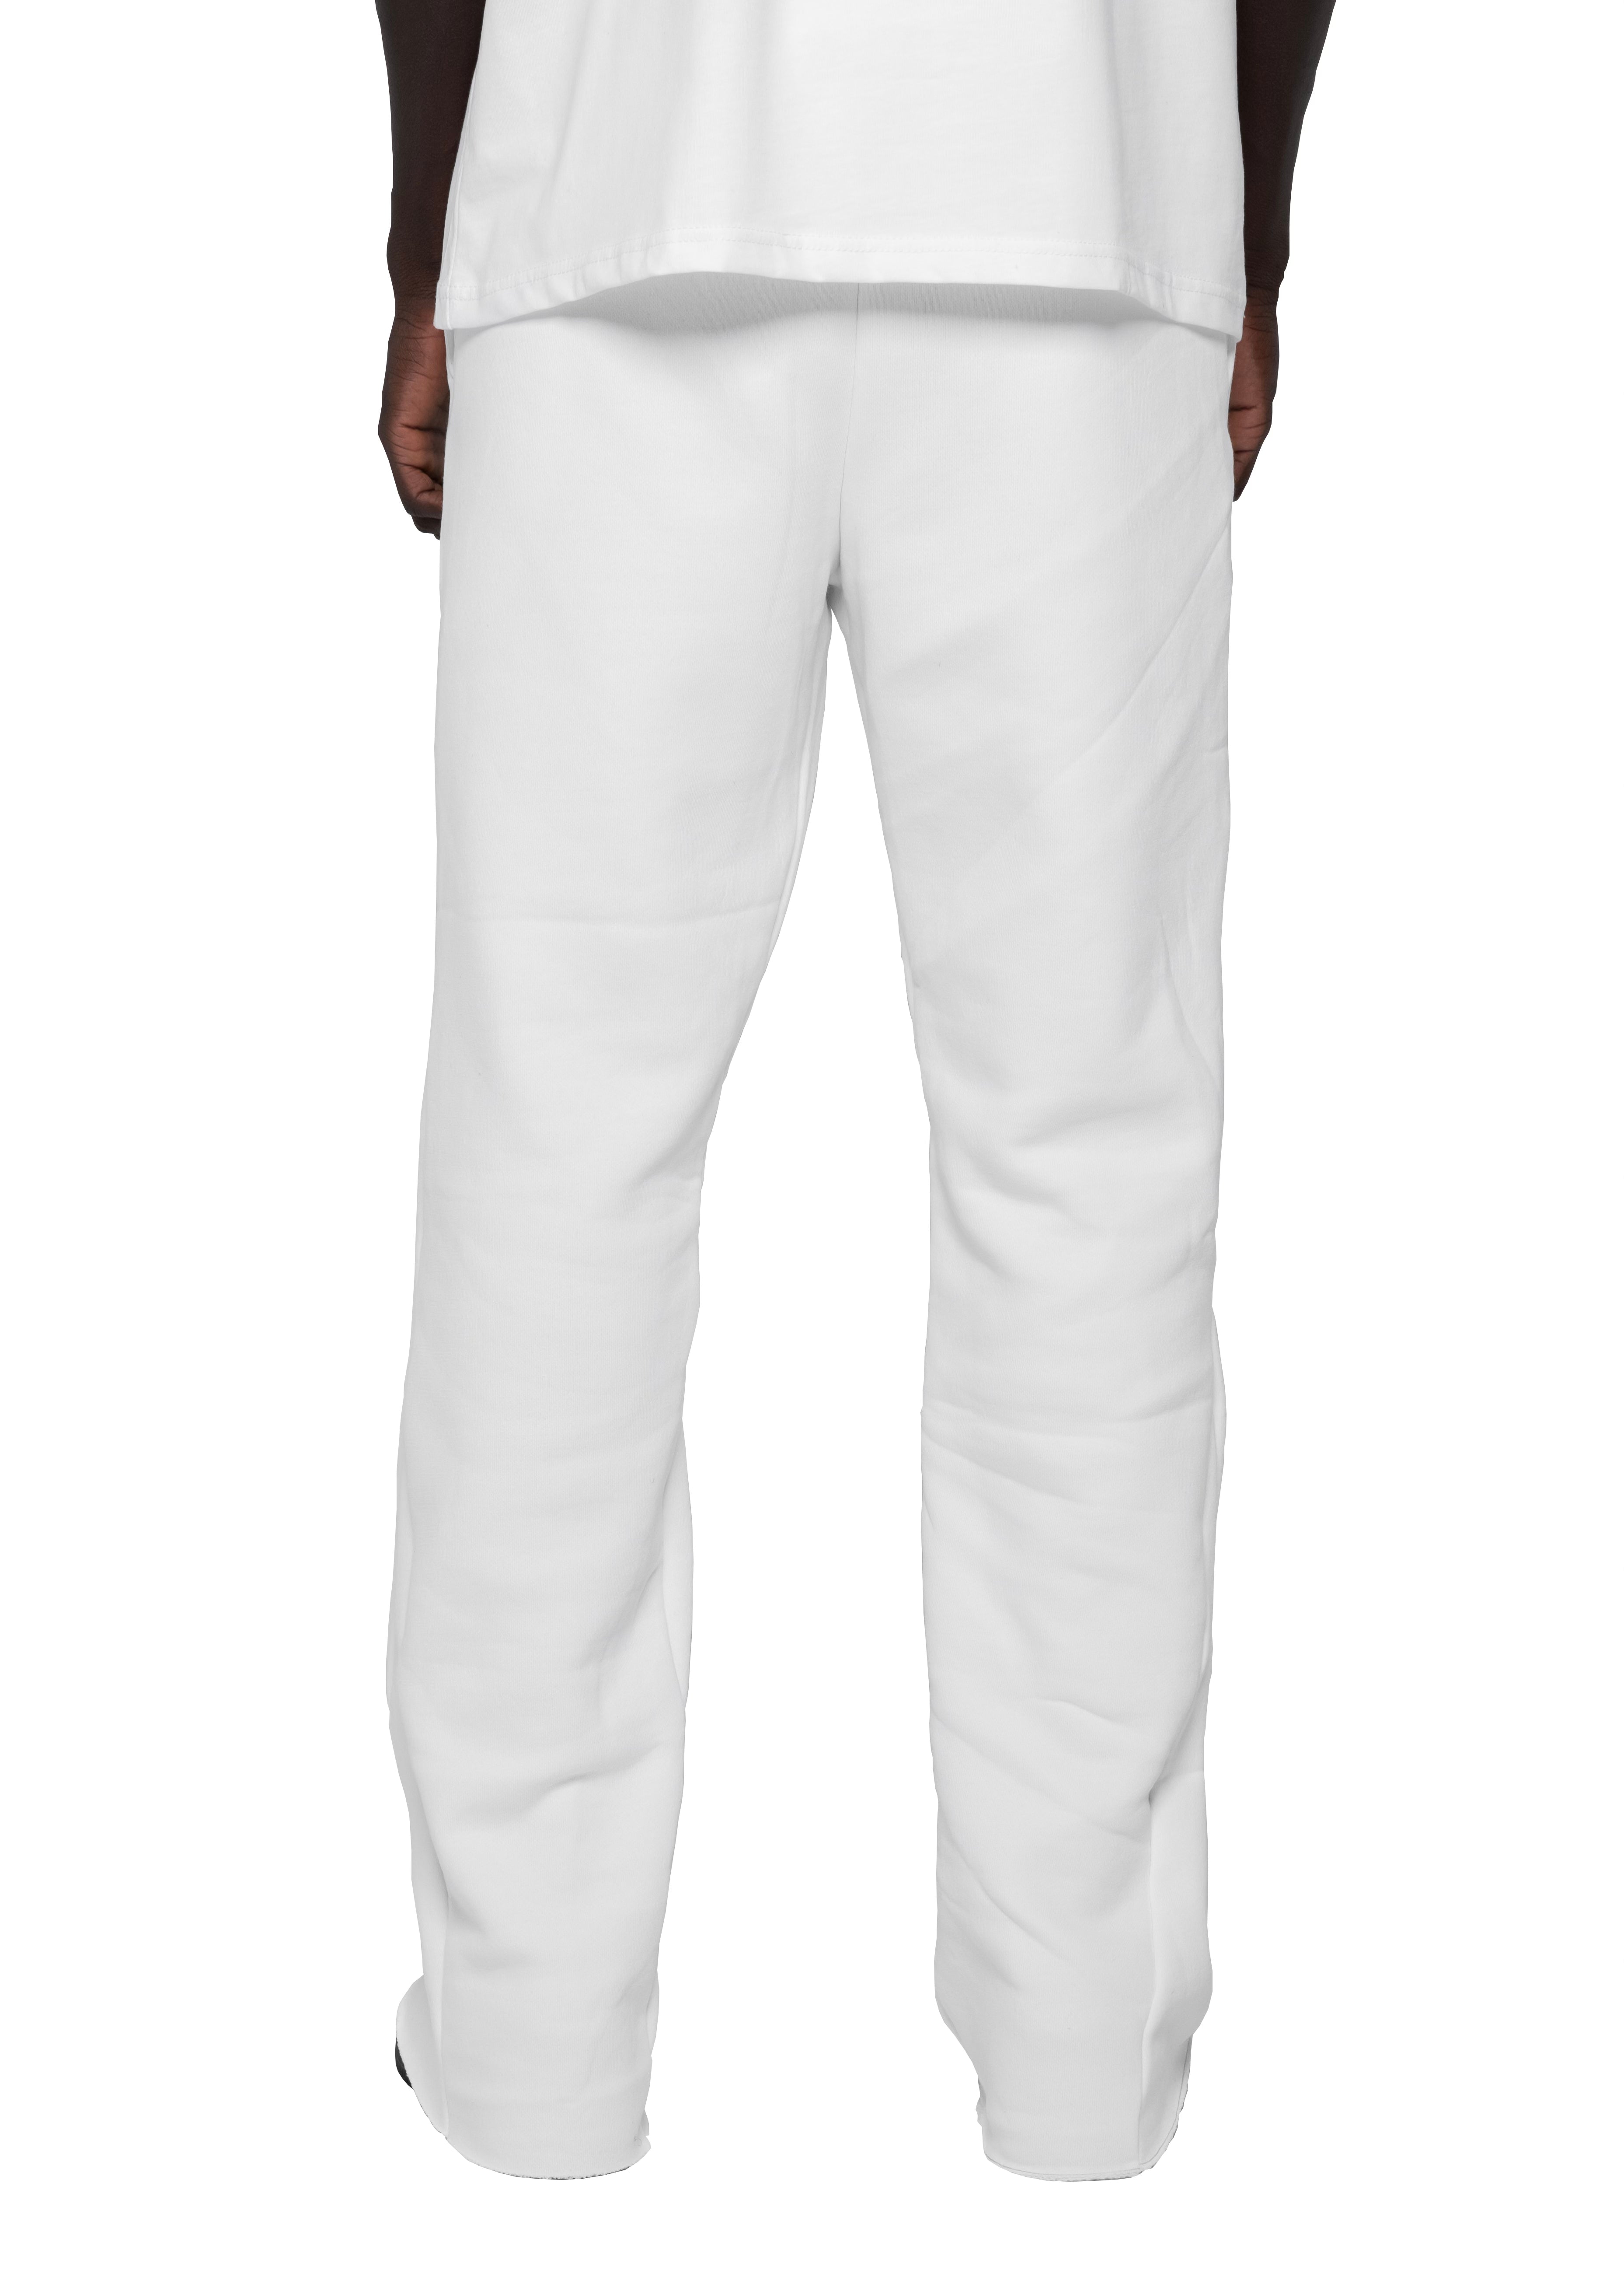 White FW Flare Sweatpants